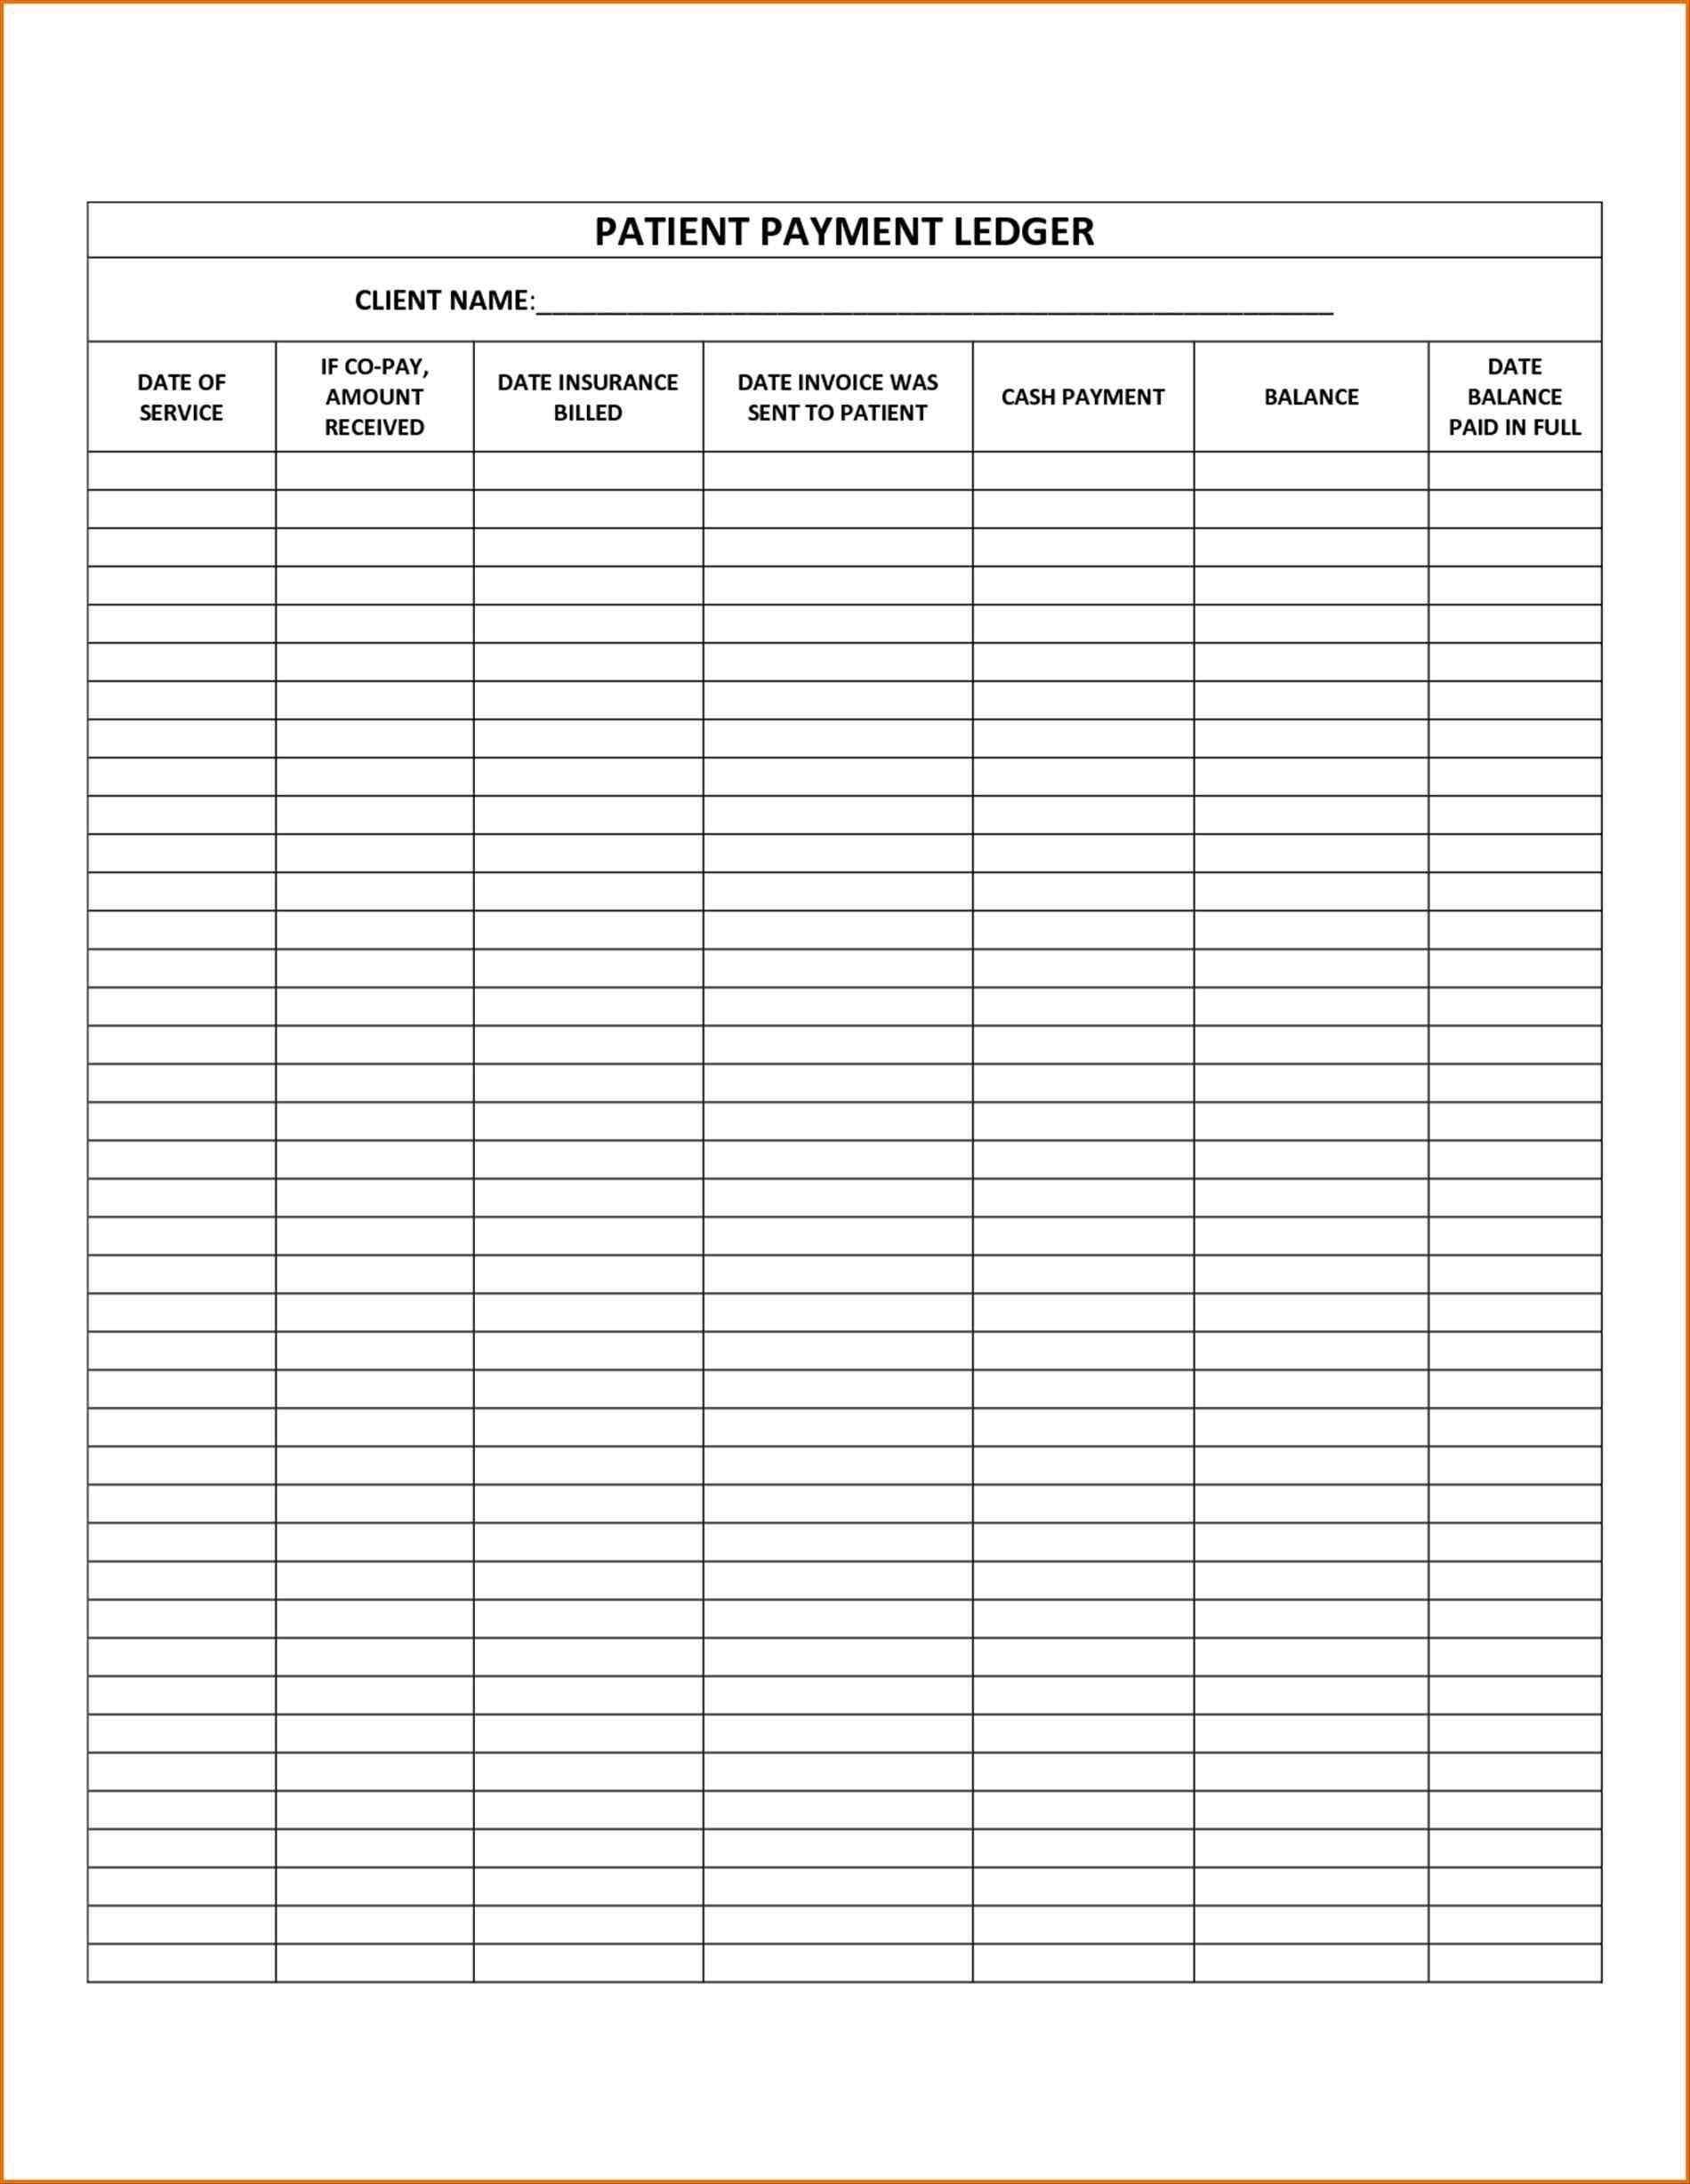 Fuel Inventory Management Spreadsheet On Inventory Spreadsheet Free inside Free Inventory Management Spreadsheet